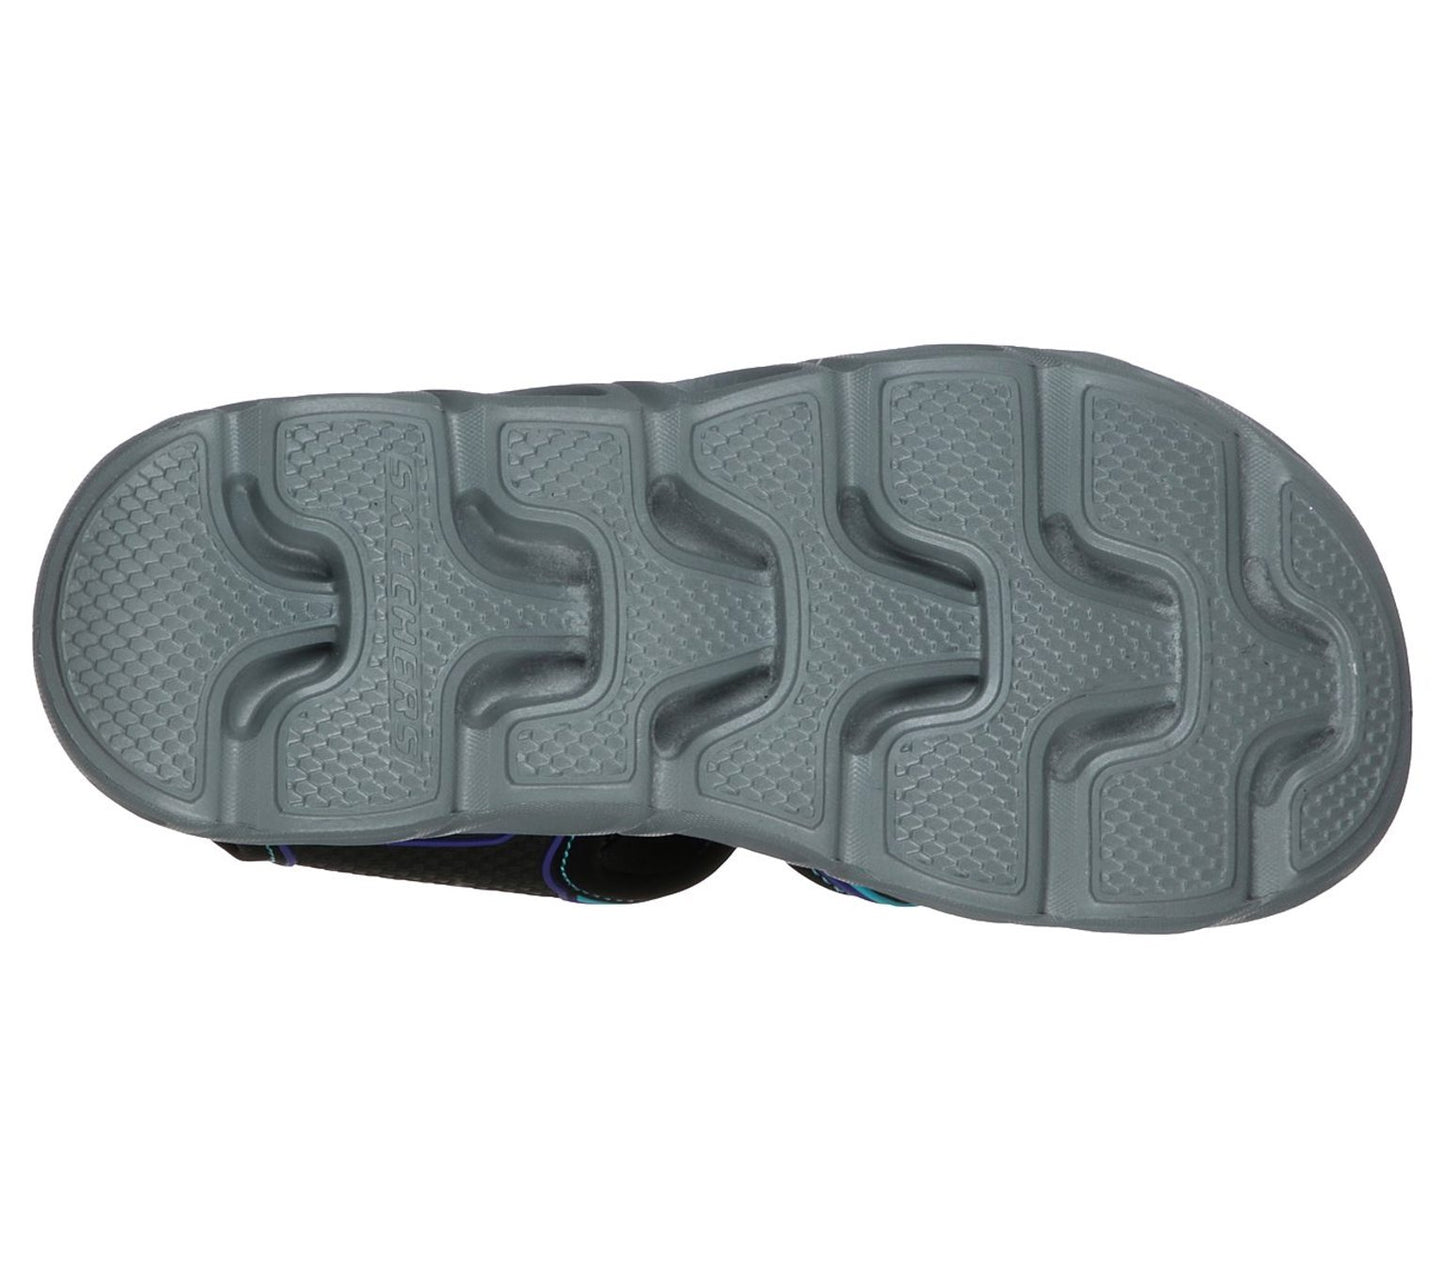 Skechers, sandal m/lys, 48-0167 - Sort/turkis